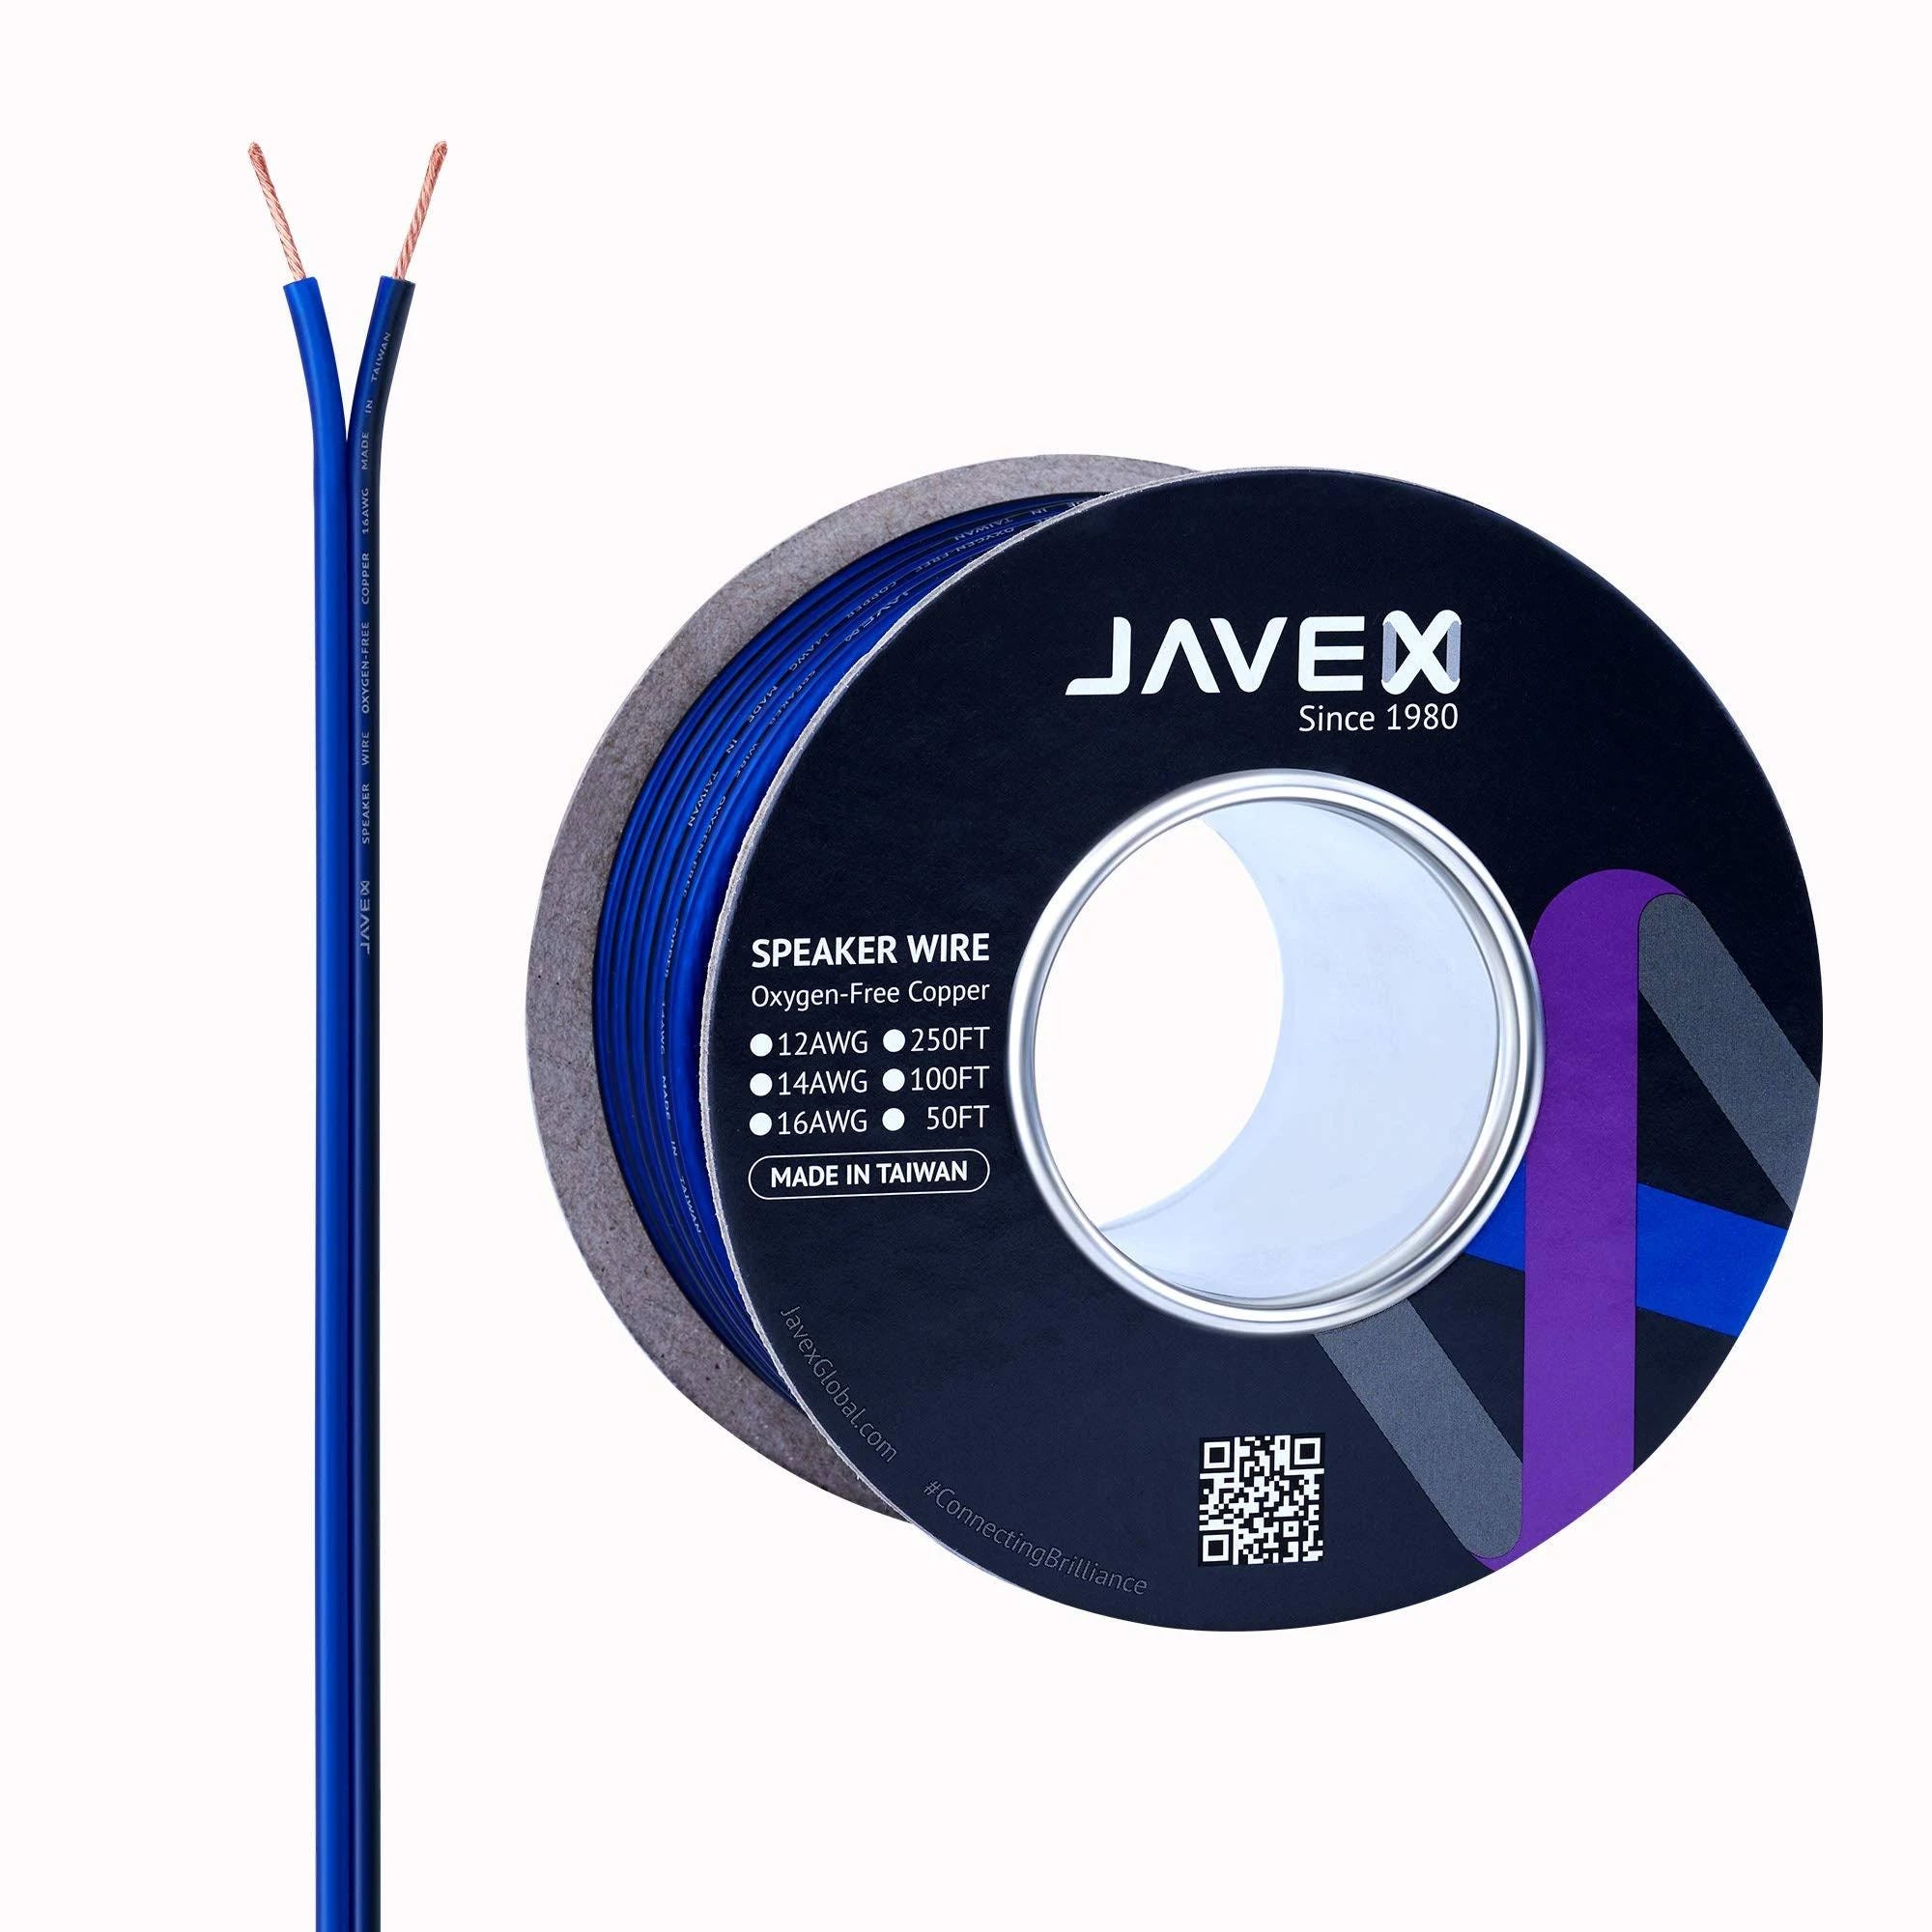 Oxygen-Free Copper 16-Gauge Speaker Wire with PVC Jacket | Image